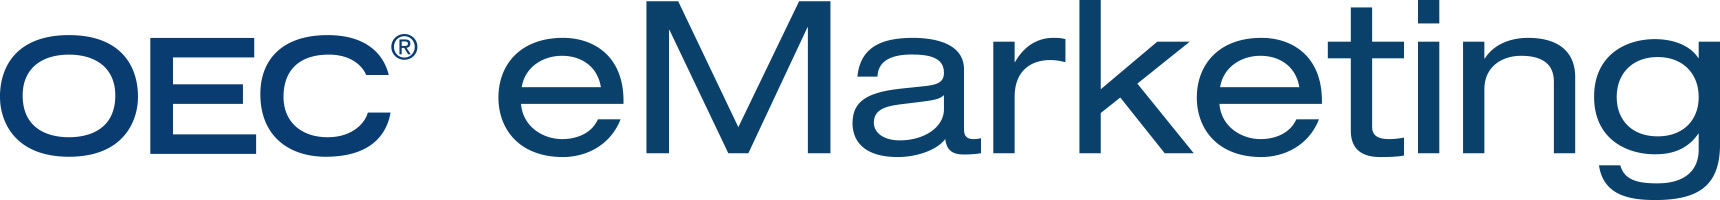 eMarketing logo